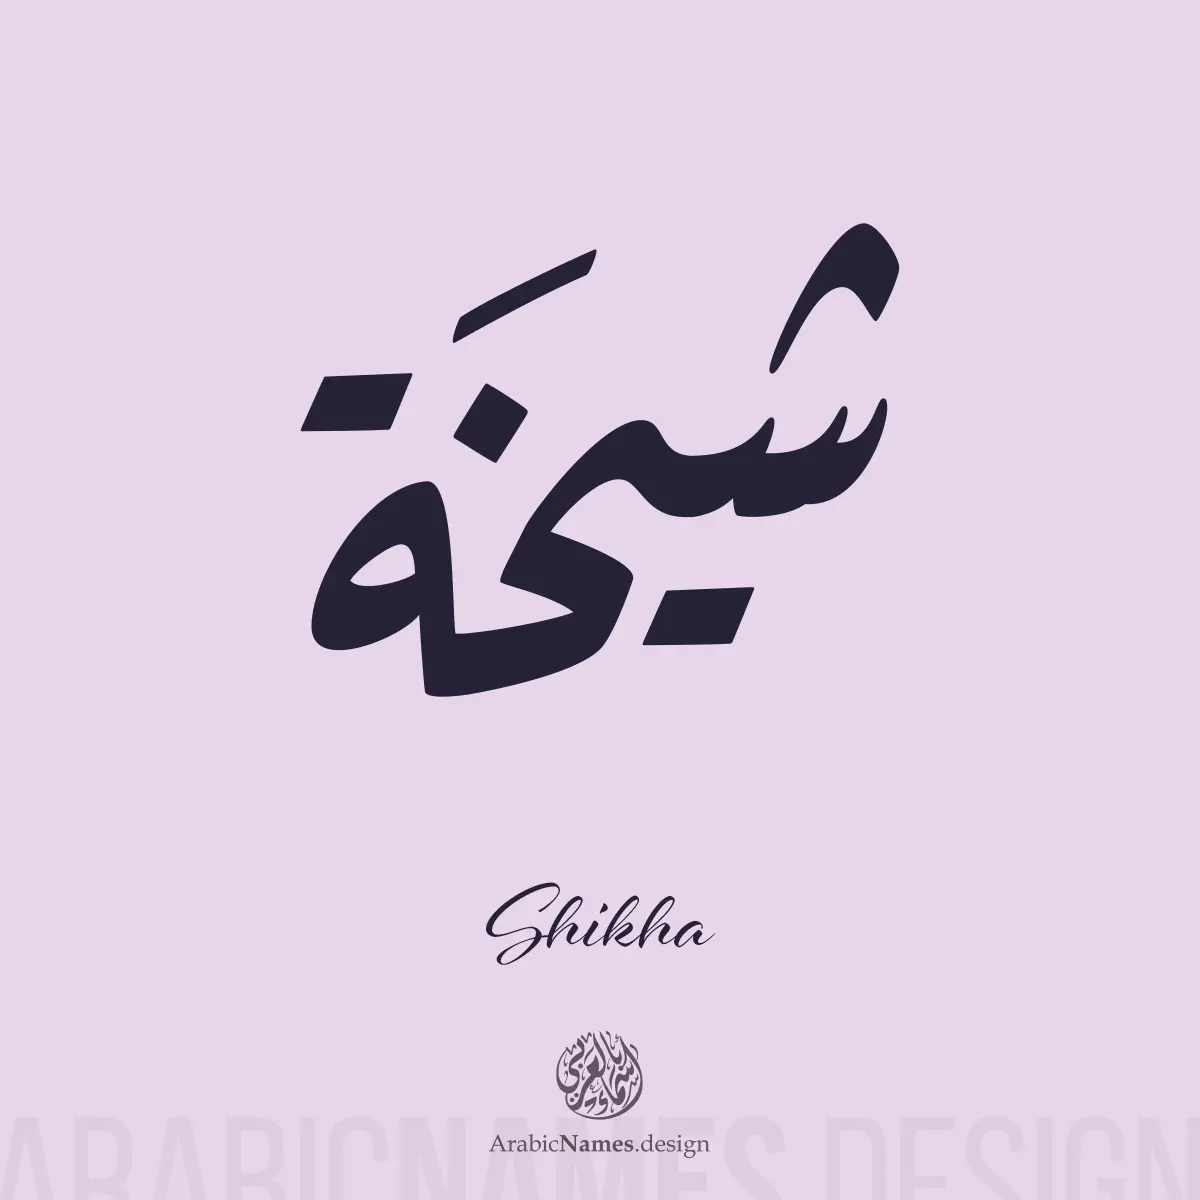 Shaikha شيخة Shaikha Name Design with Arabic calligraphy in Ruqaa style. اسم شيخة بخط الرقعة